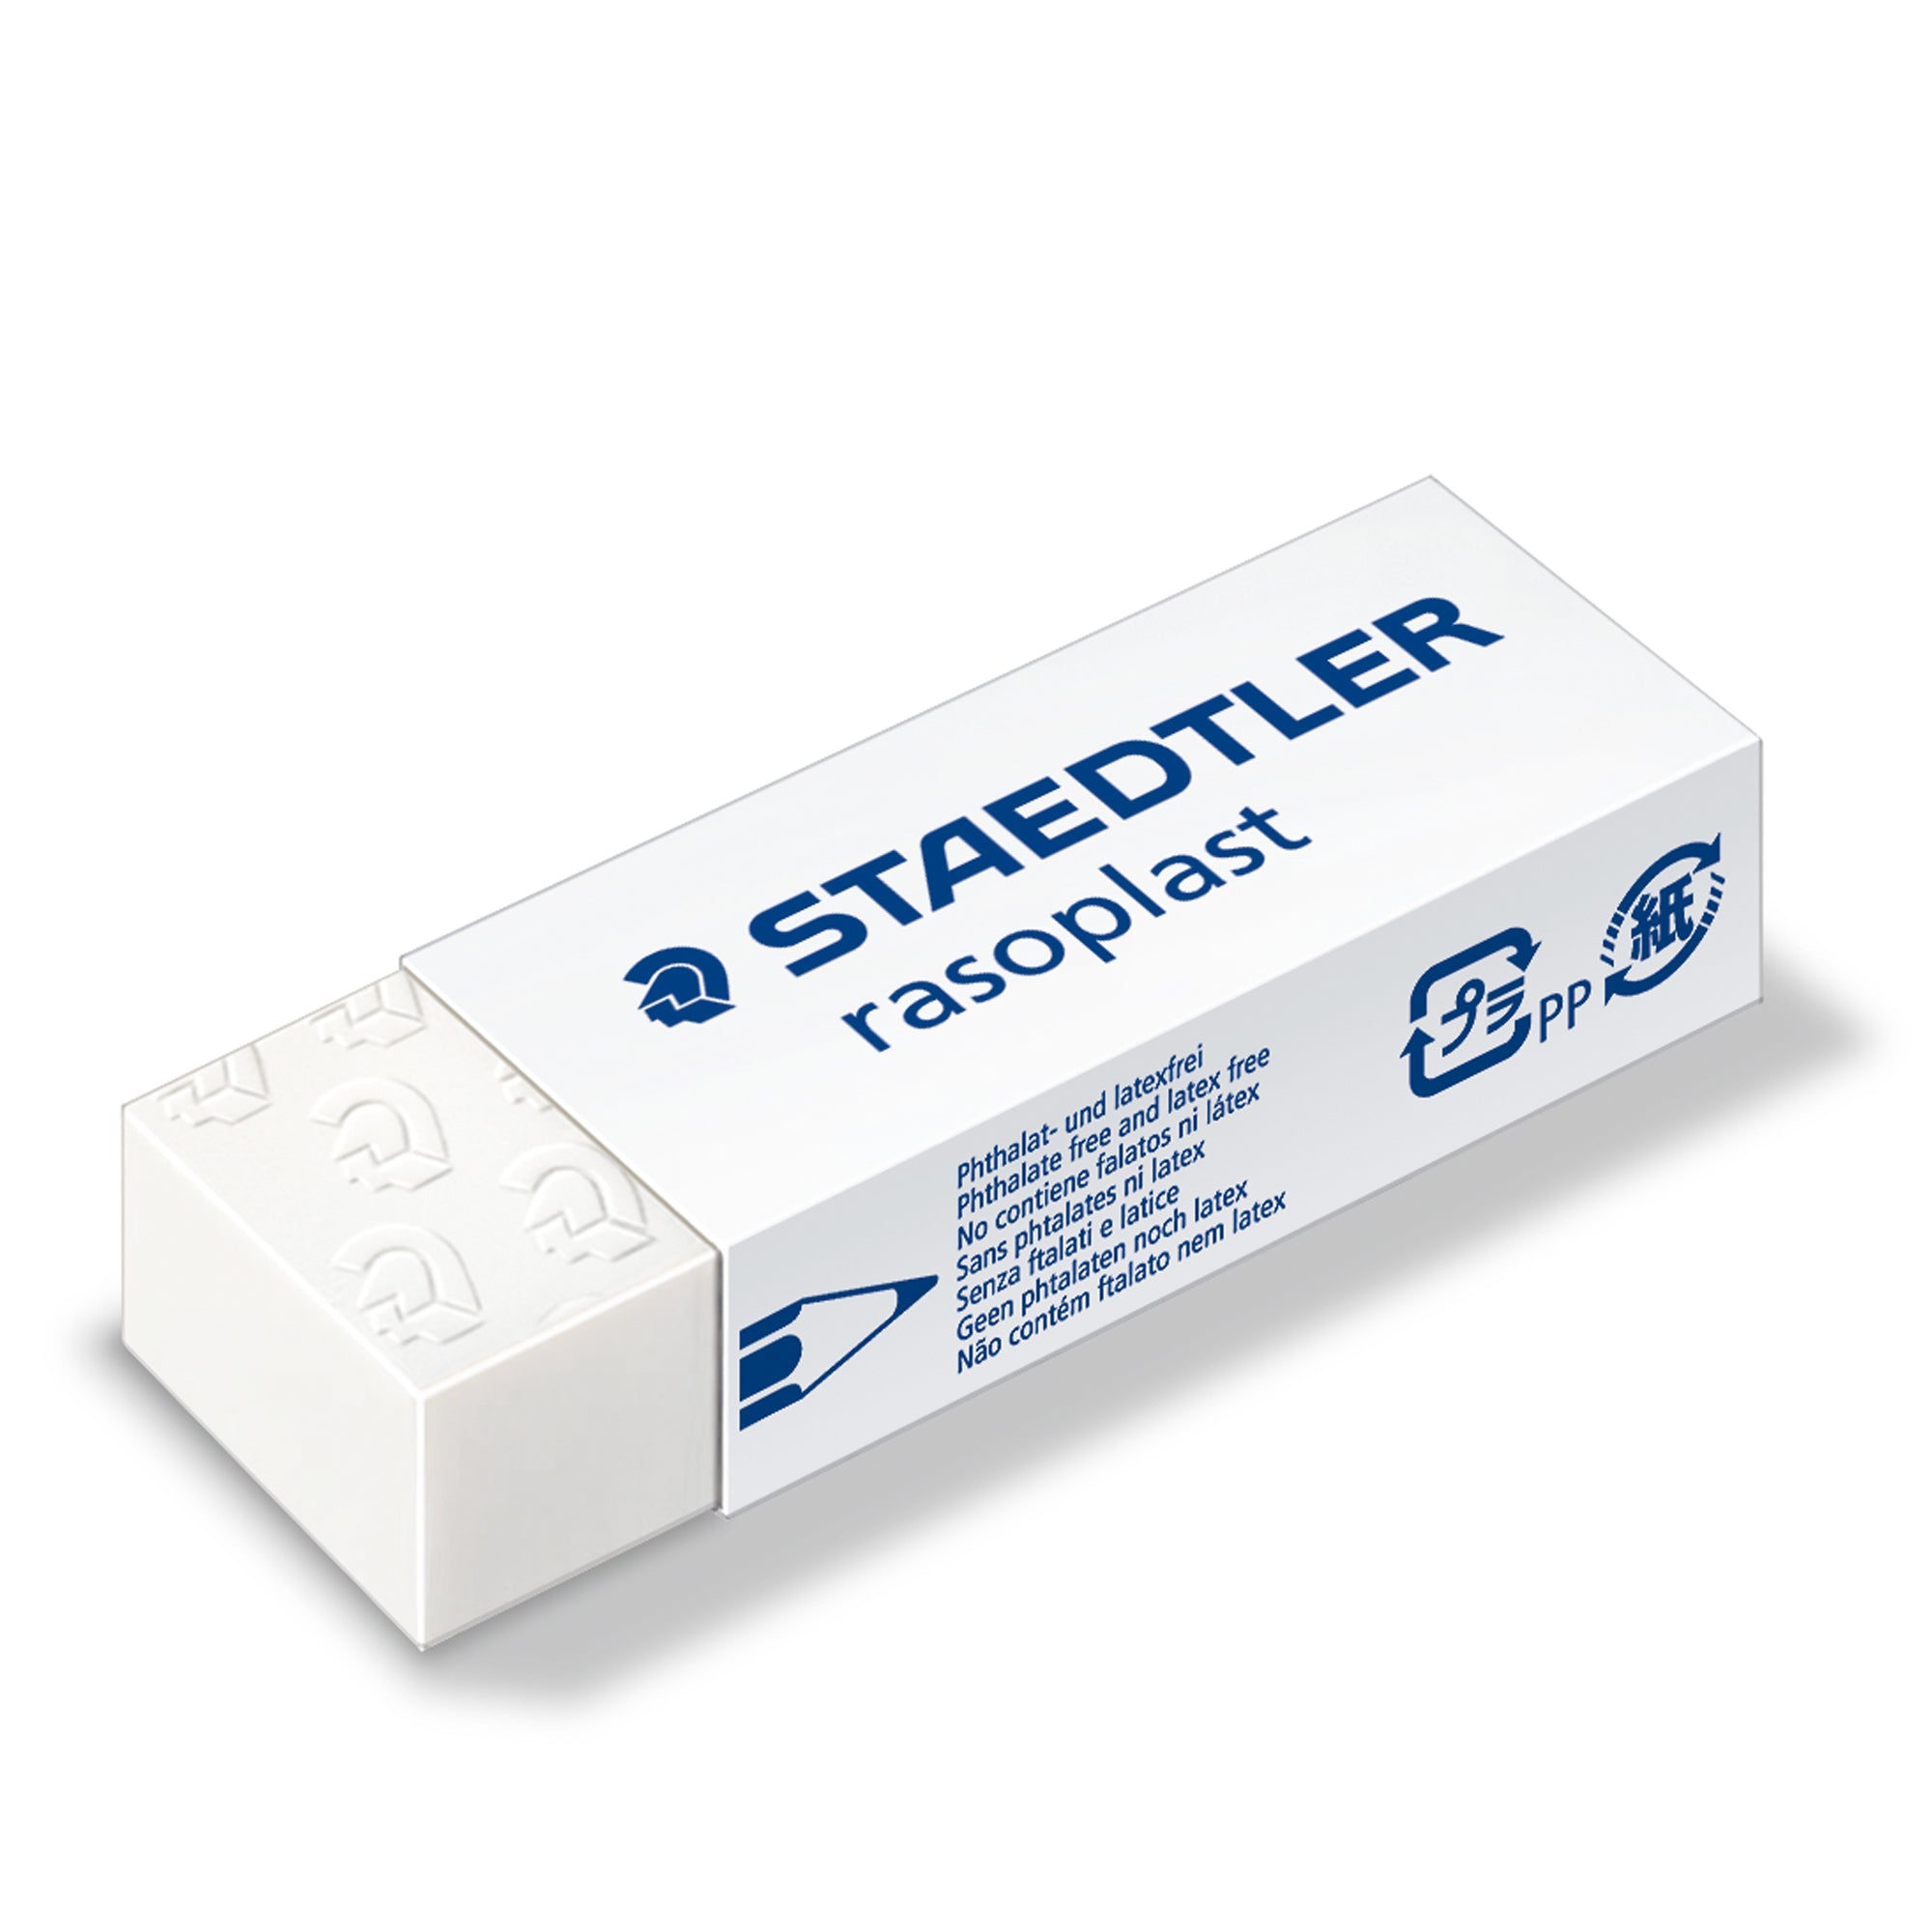 staedtler-box-20-gomme-rasoplast-526-b20-dim-63x13x23mm-bianca-matita